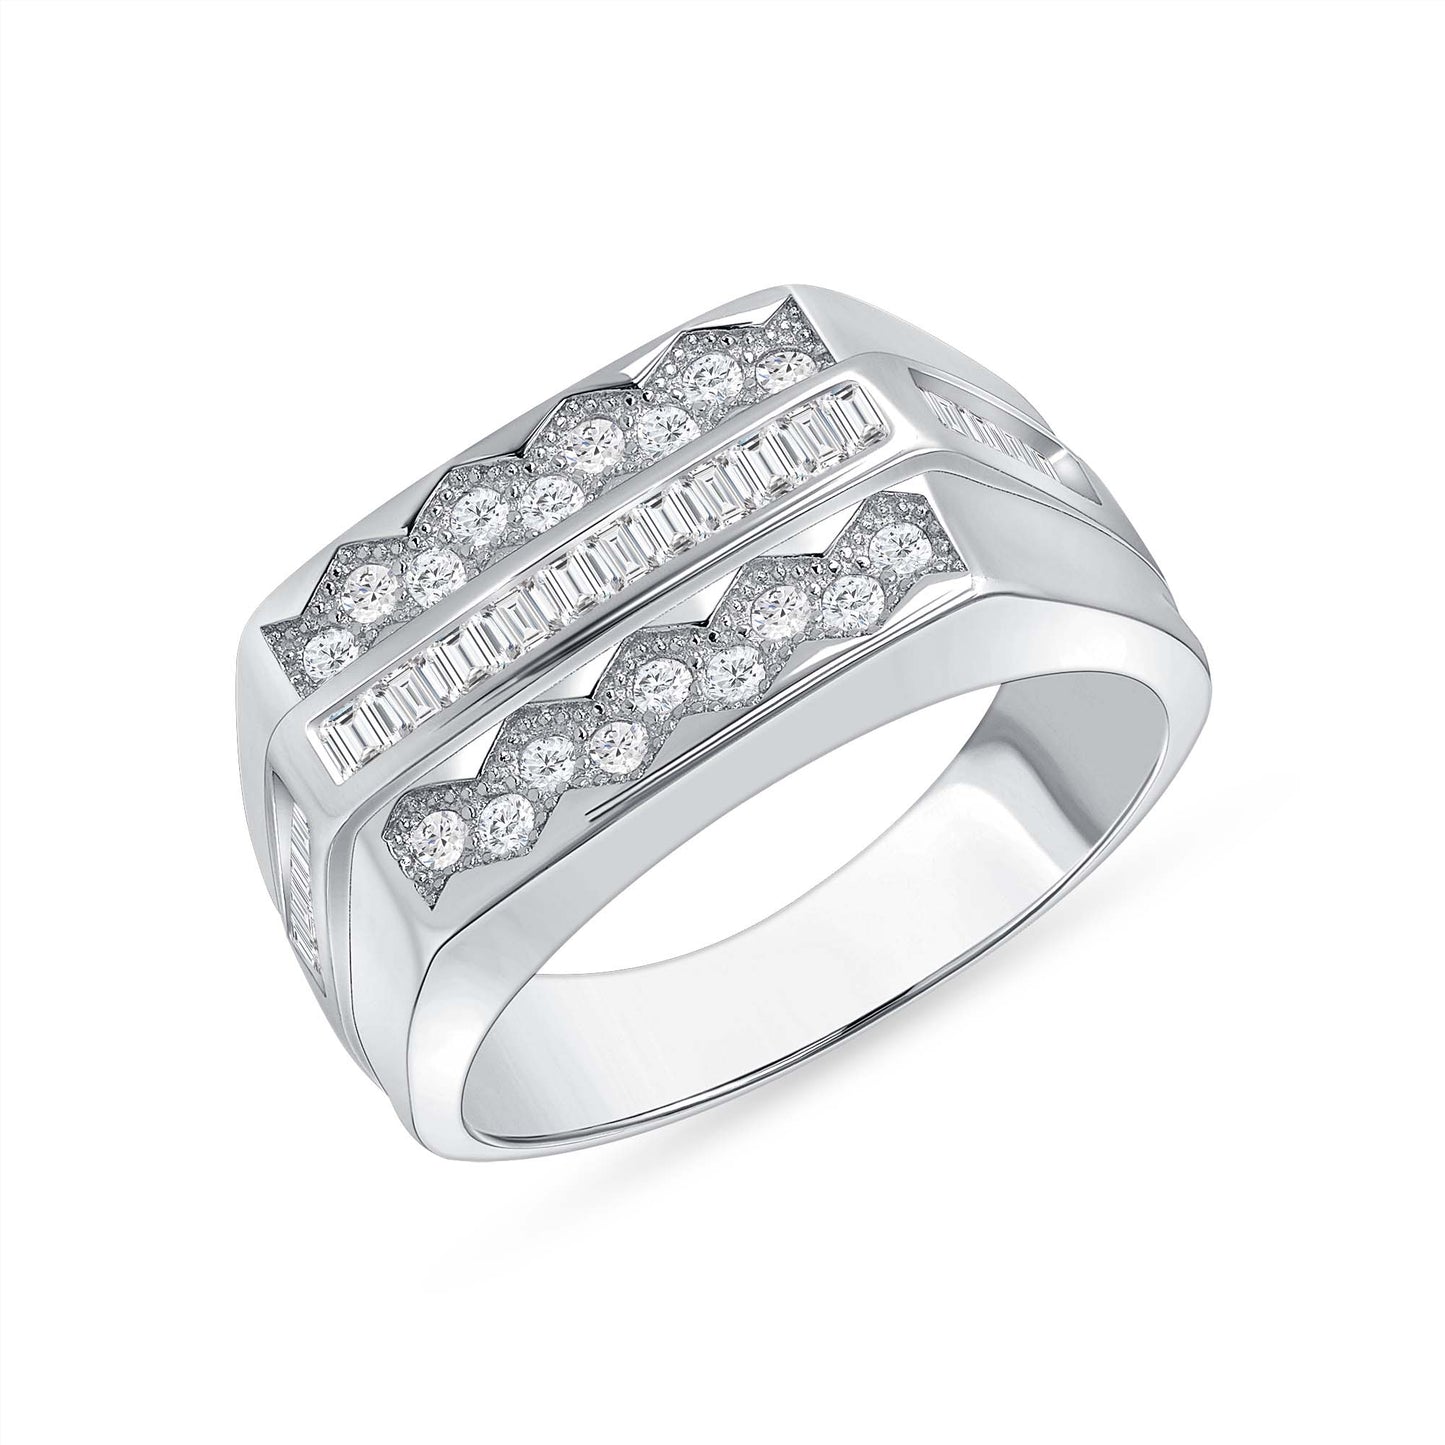 Silver 925 Cubic Zirconia Men's Ring. LF110-4522